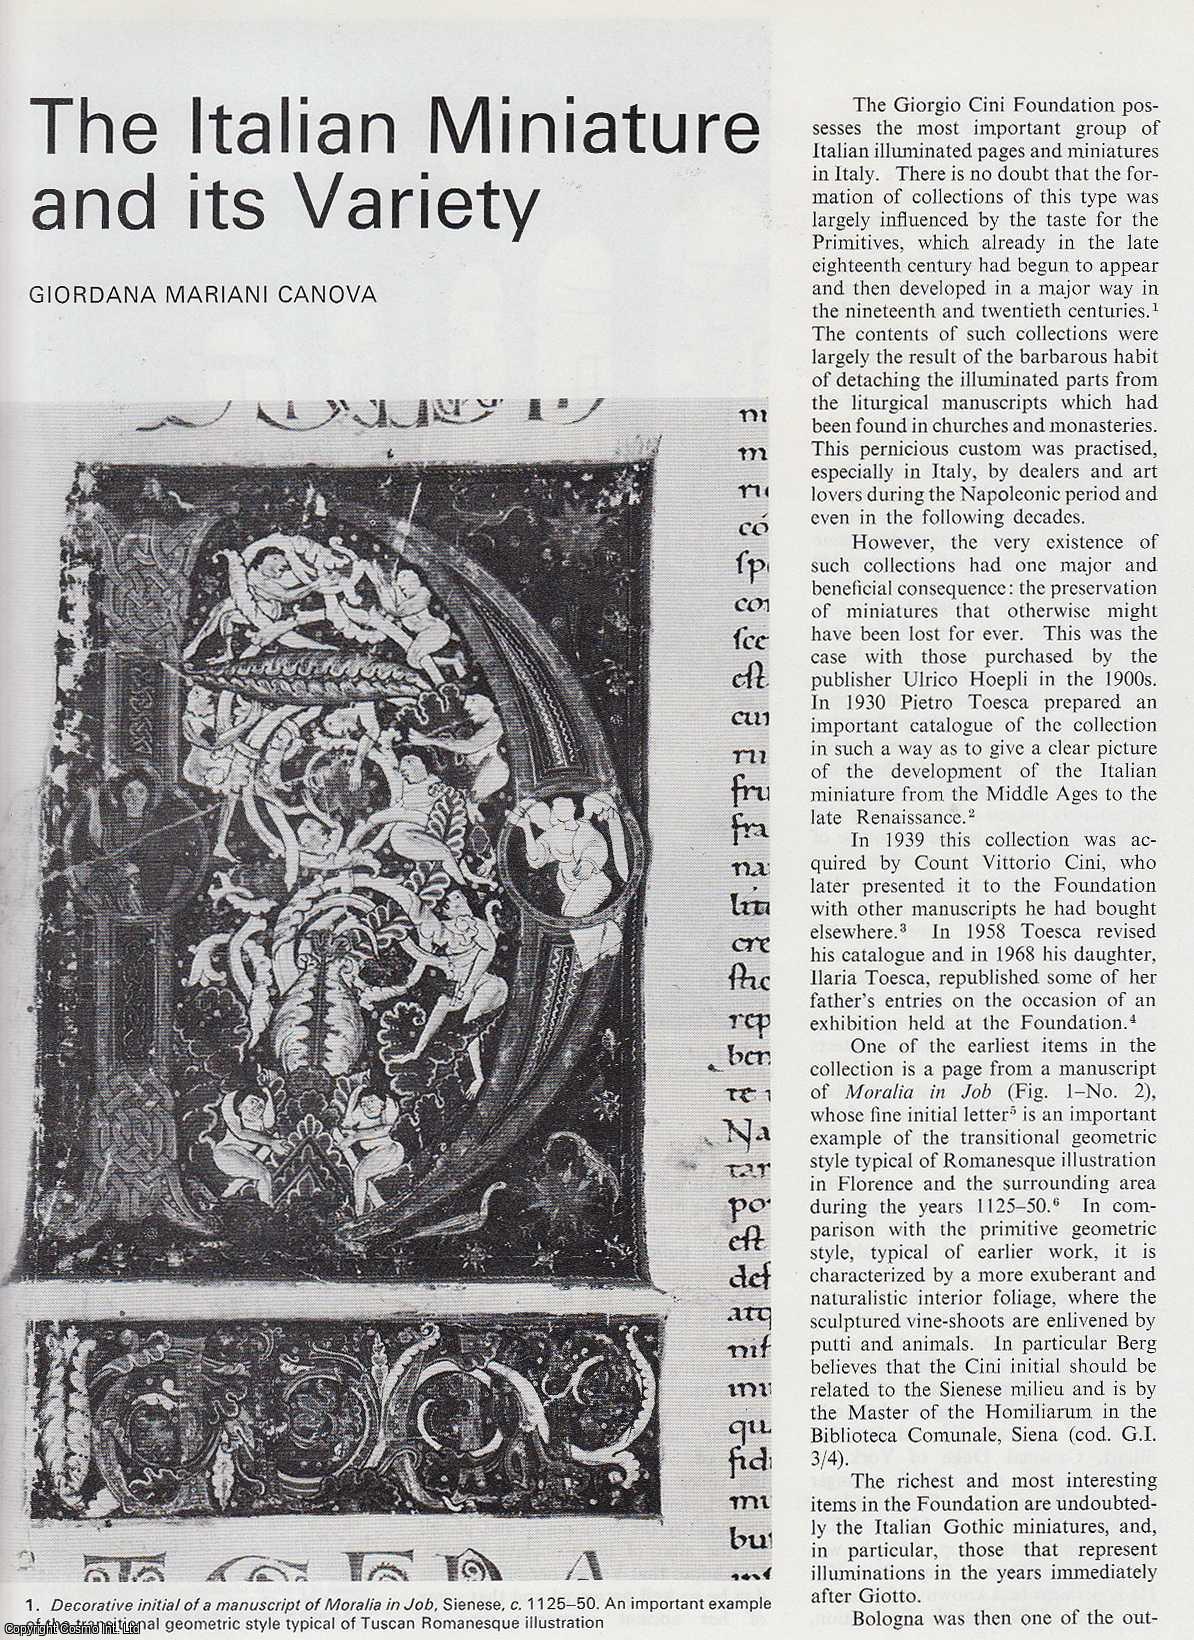 Giordana Mariani Canova - The Italian Miniature and its Variety. An uncommon original article from Apollo, the Magazine of the Arts, 1976.